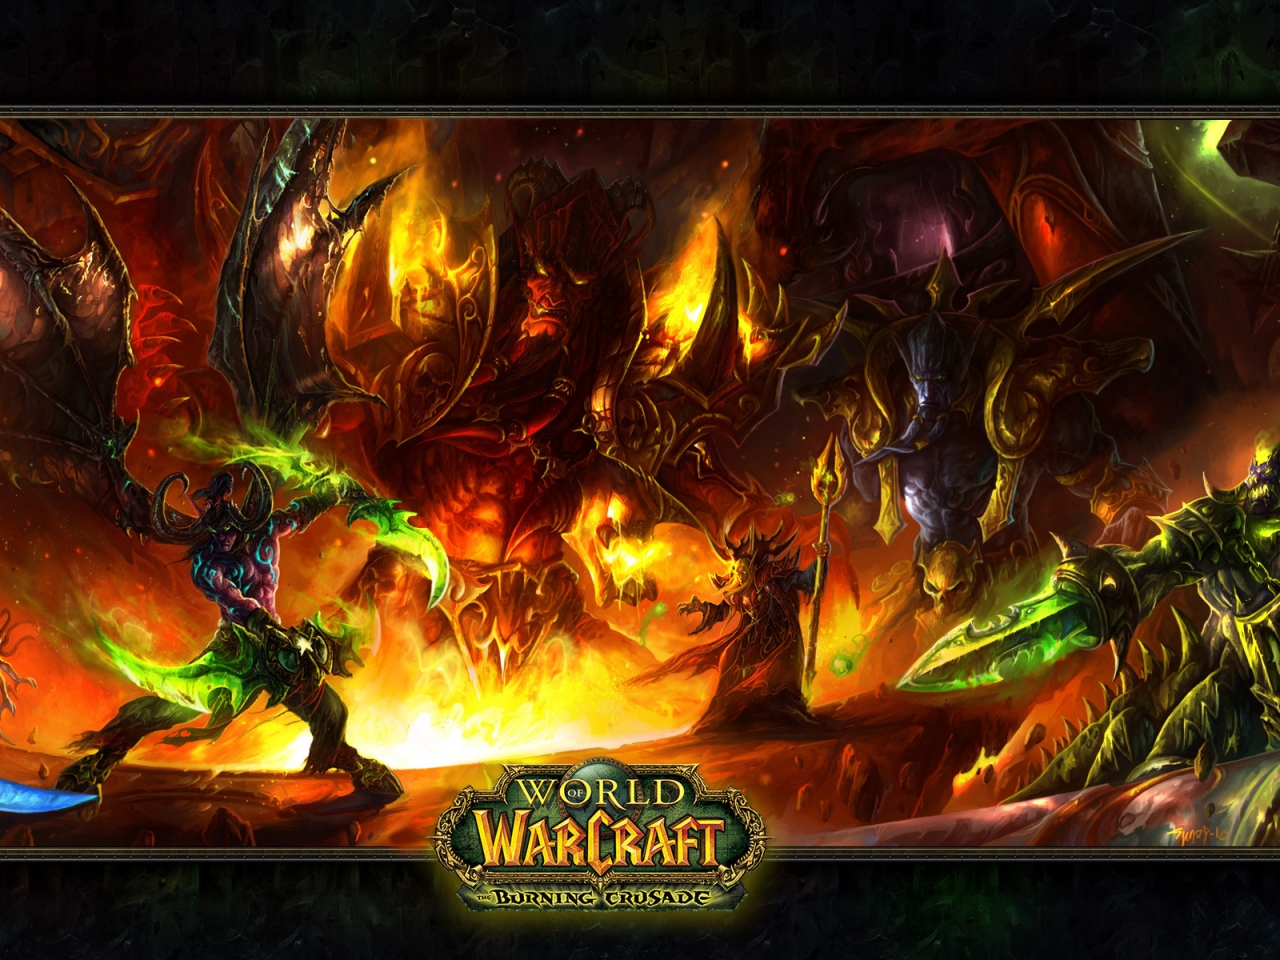 World of Warcraft Burning Crusade for 1280 x 960 resolution